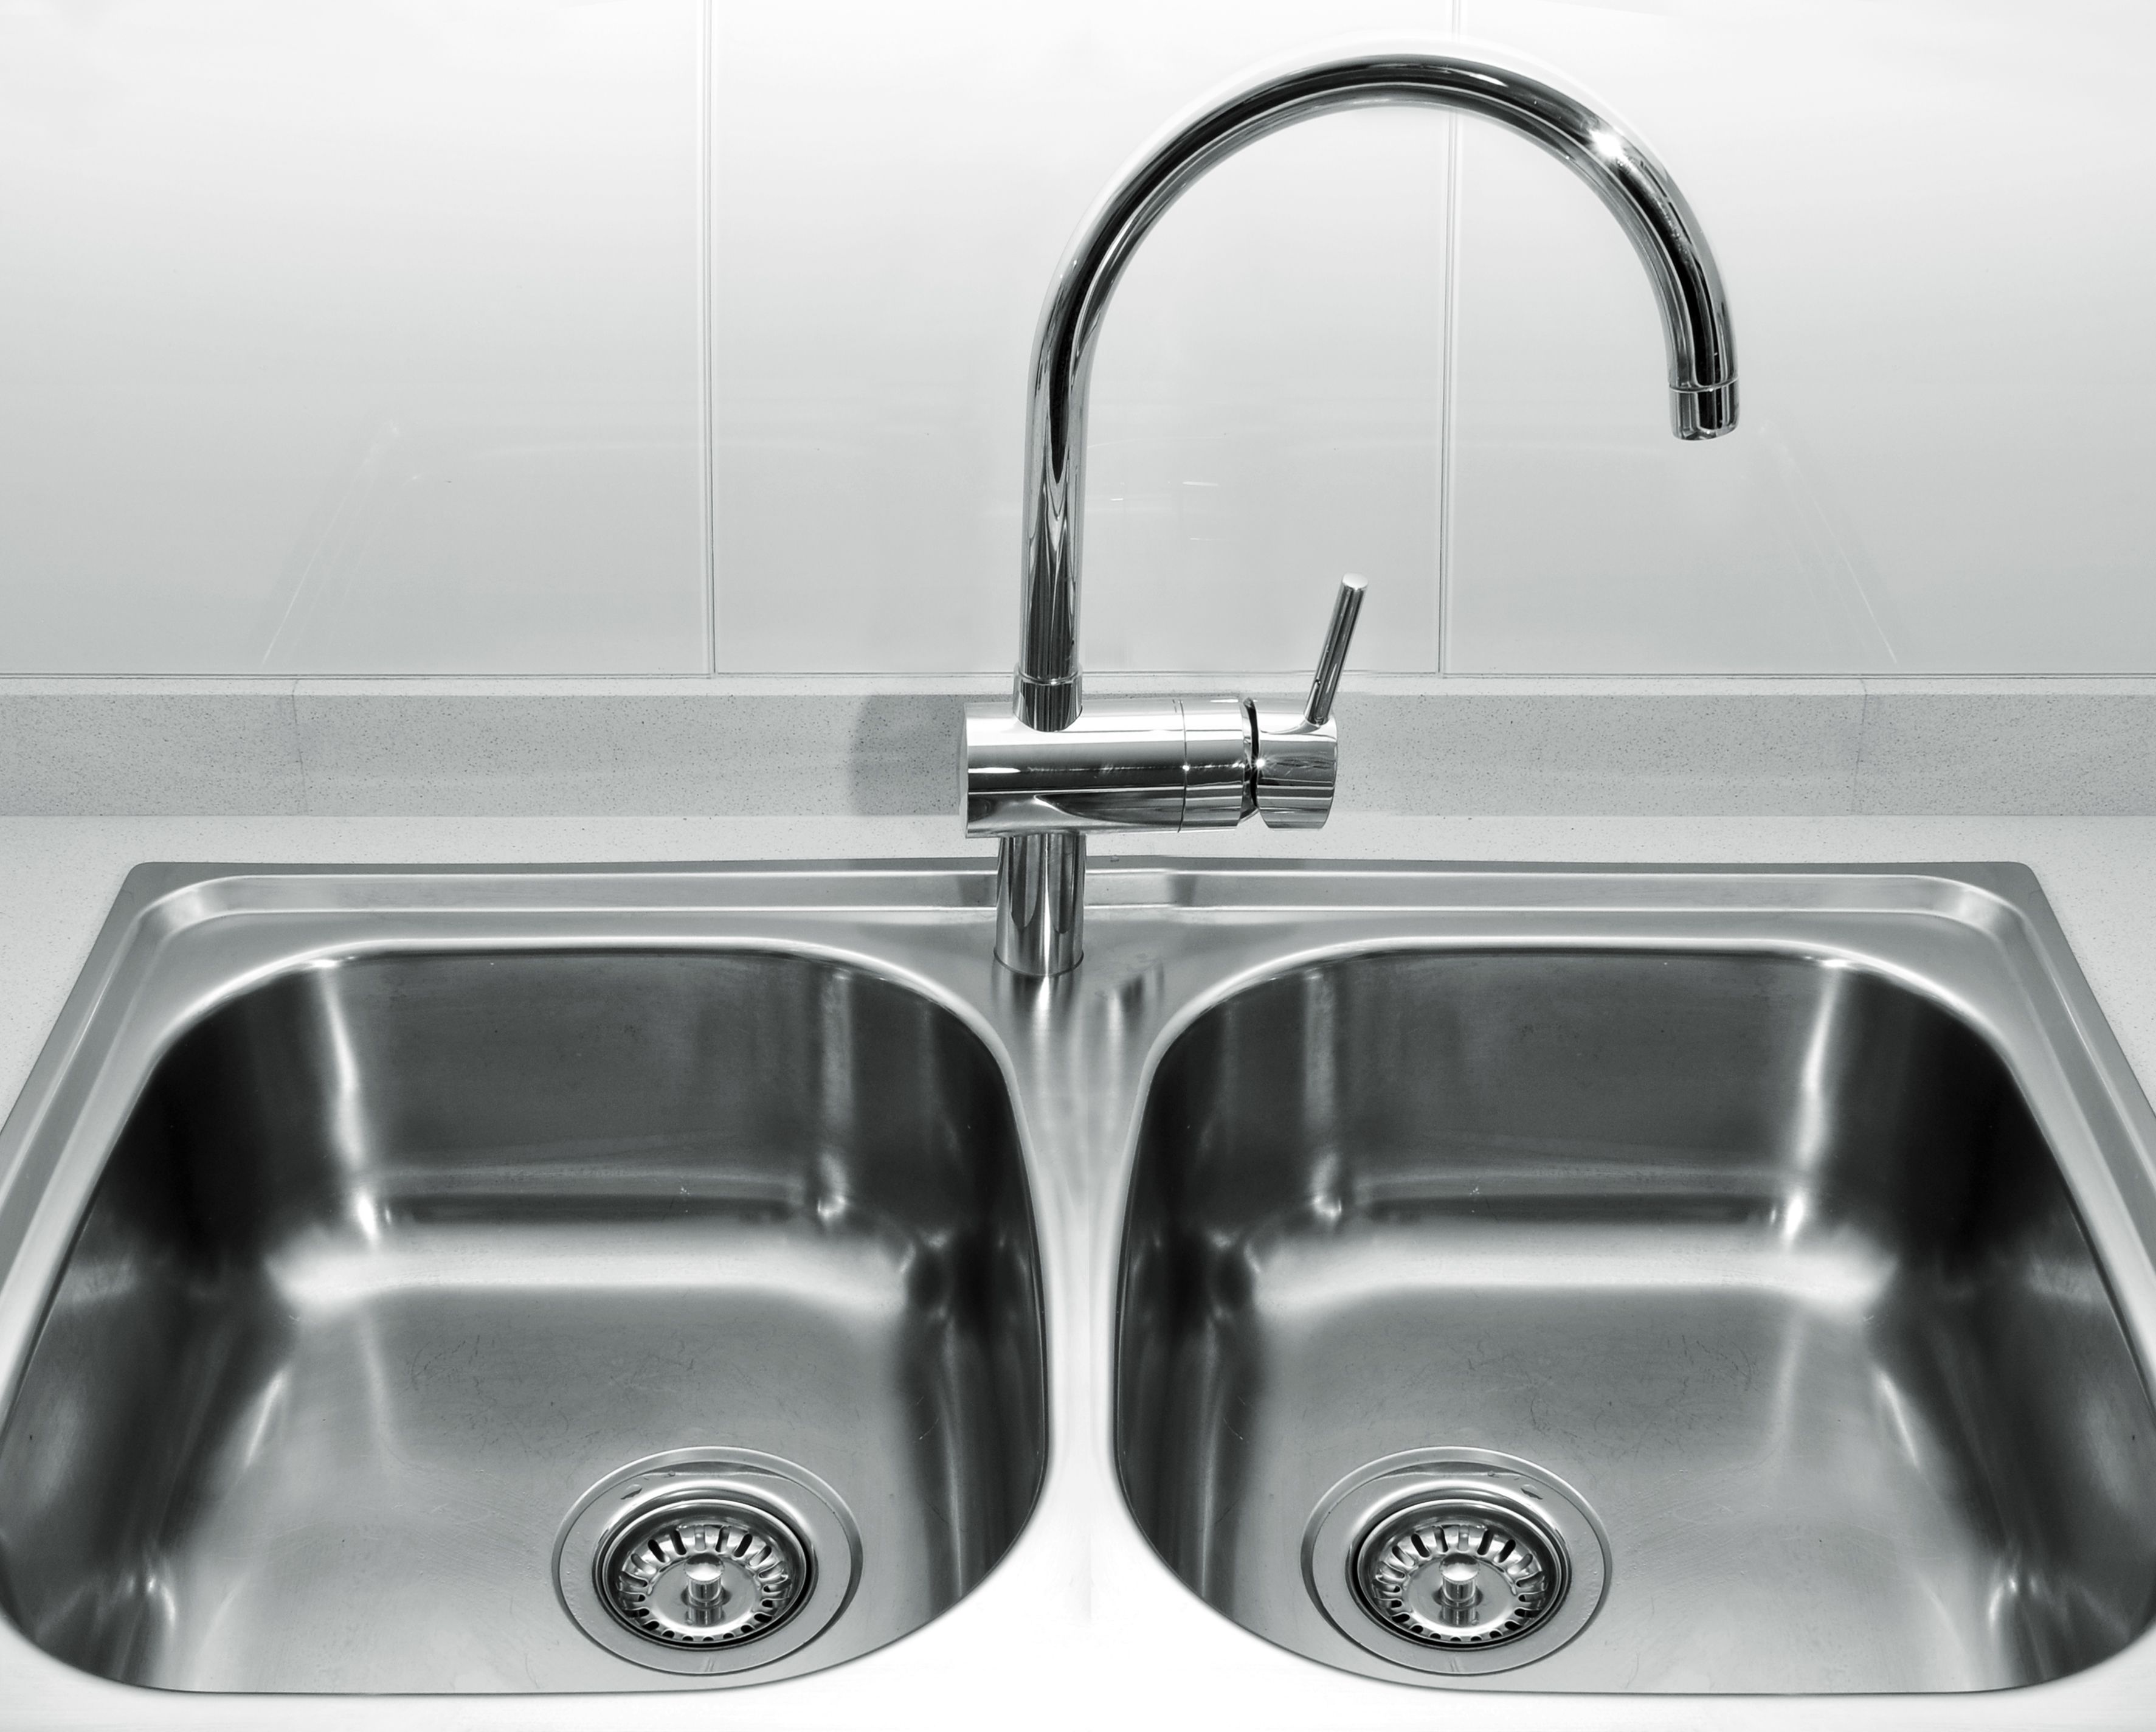 pantry sink vs kitchen sink